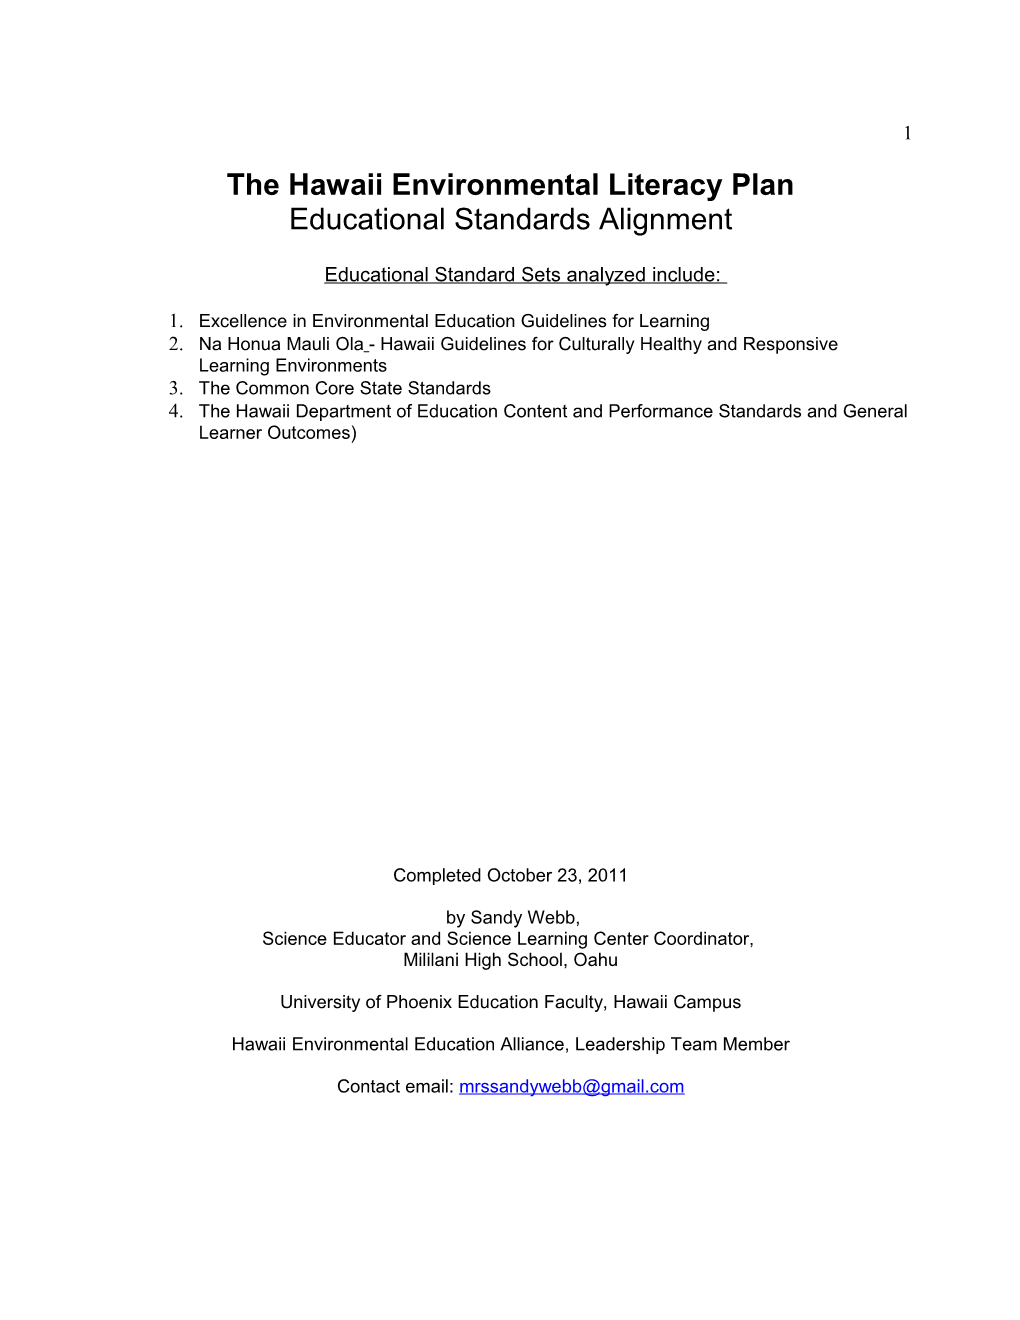 The Hawaii Environmental Literacy Plan